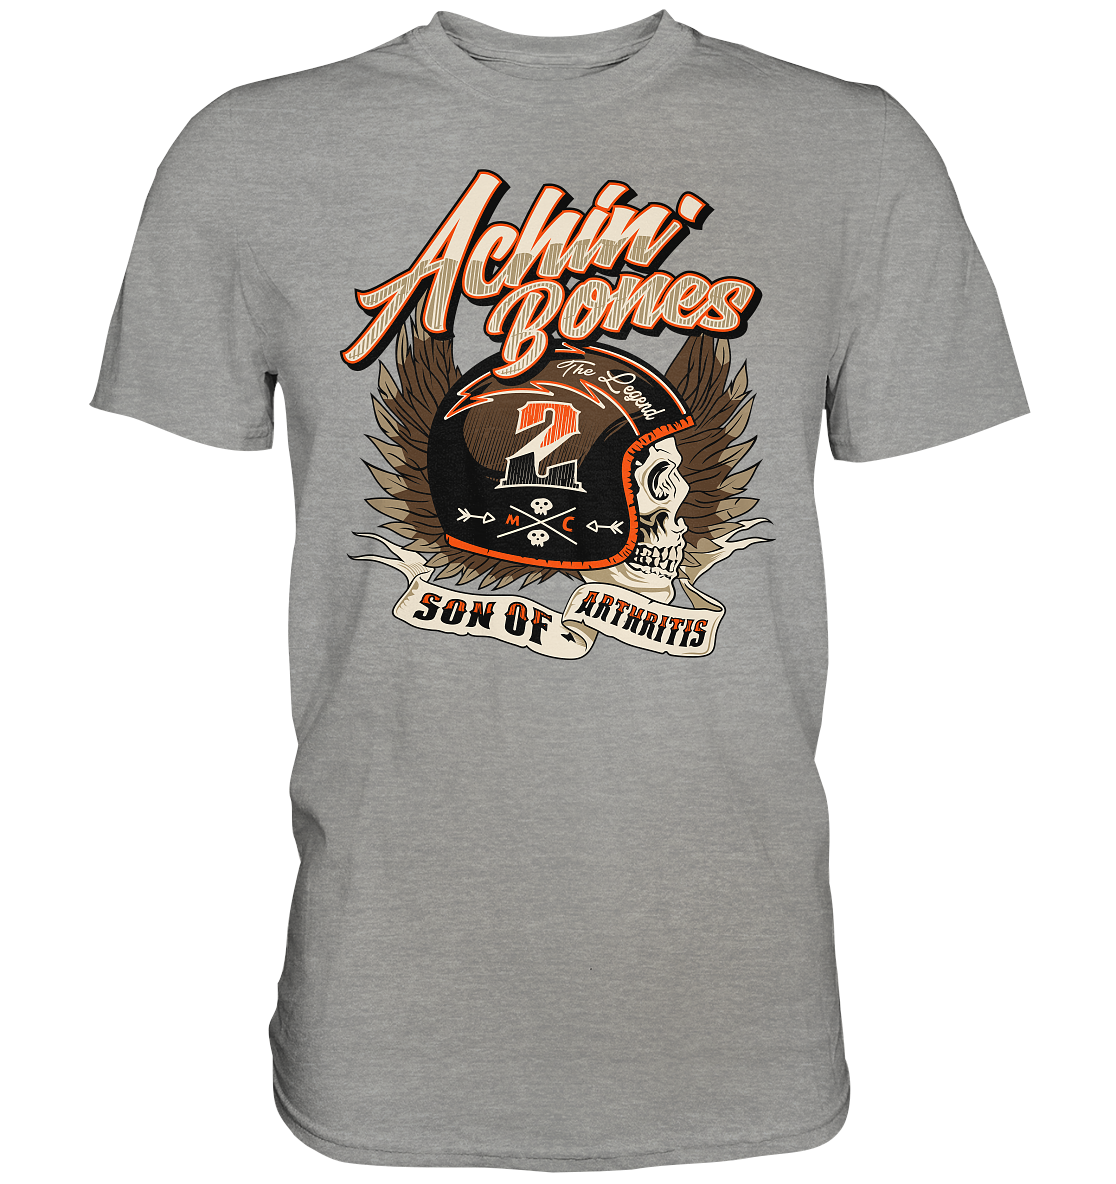 Sons of Arthritis - Achin Bones - Premium Shirt unisex shirt - Motiv Vorderseite.